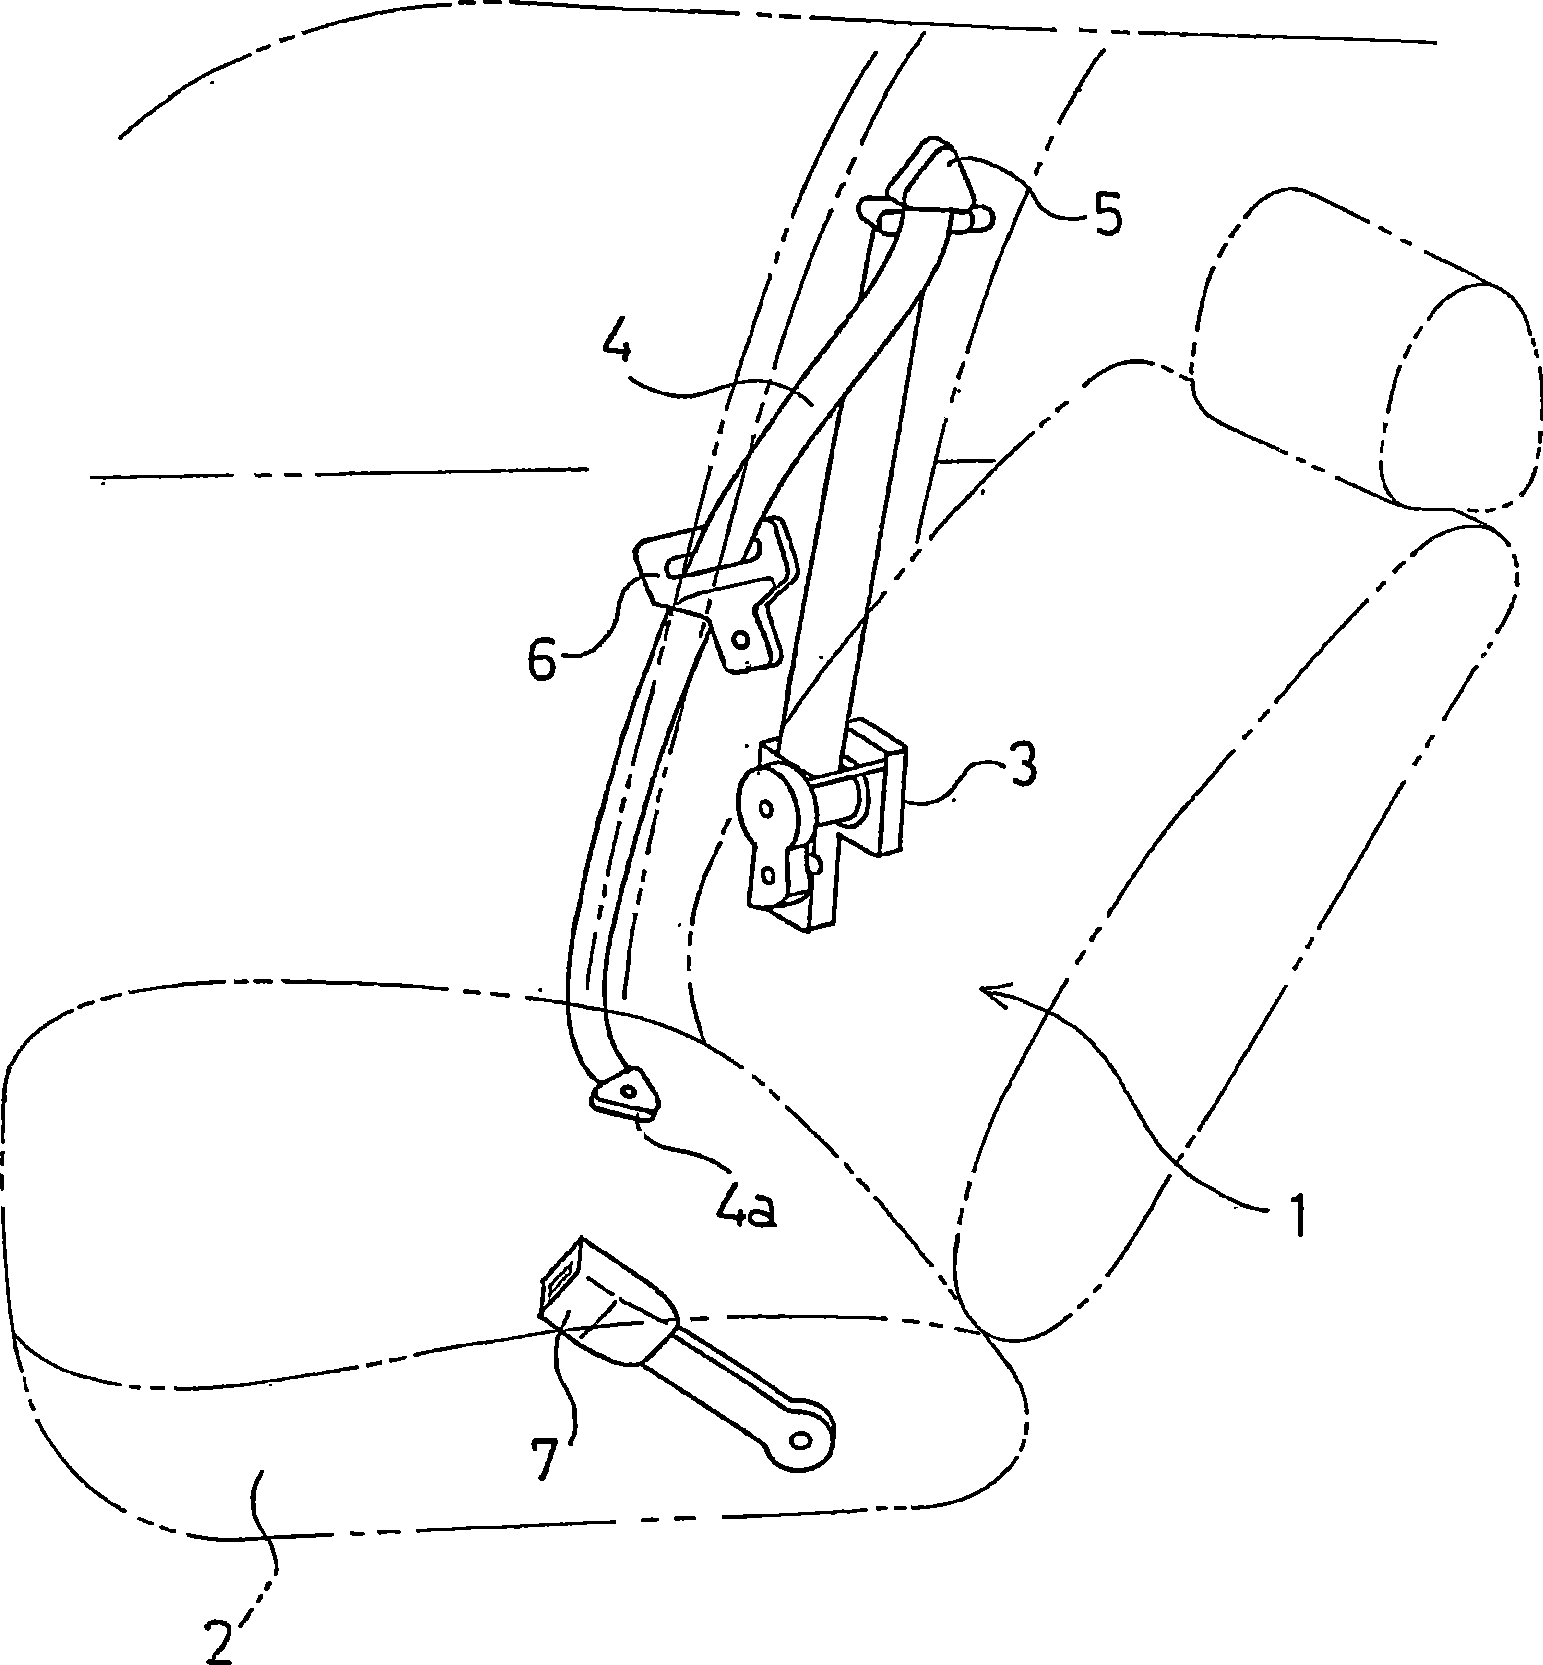 Seatbelt retractor and seatbelt device using the same